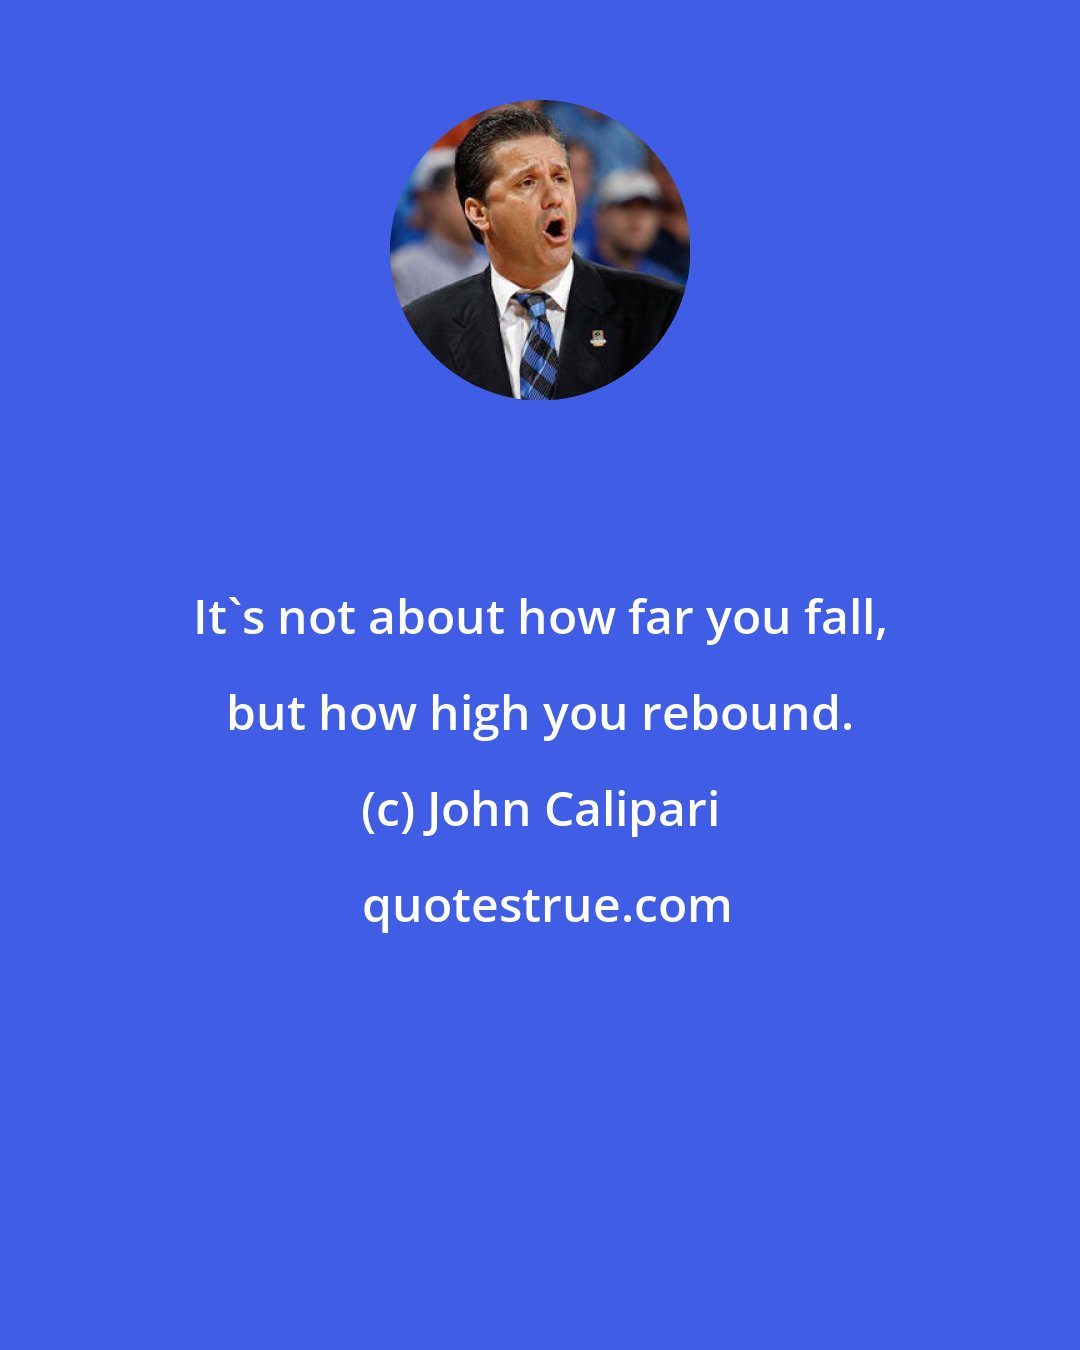 John Calipari: It's not about how far you fall, but how high you rebound.